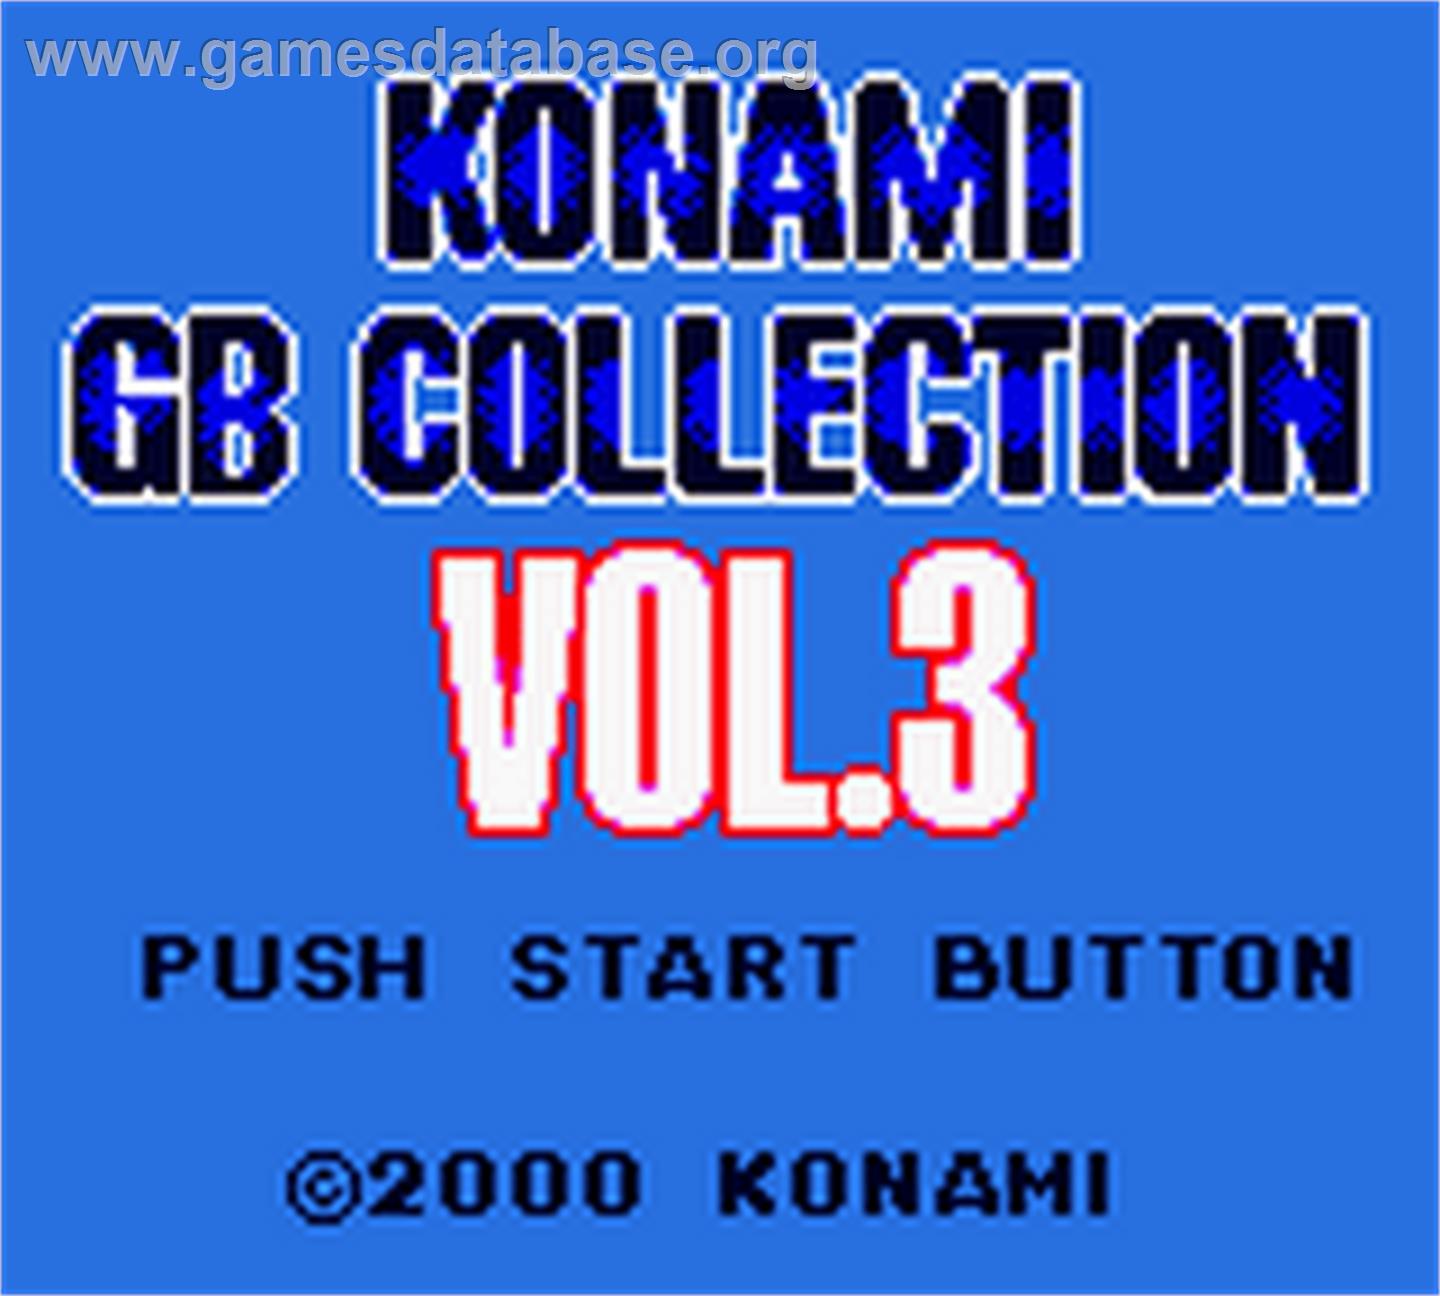 Konami GB Collection Vol. 3 - Nintendo Game Boy Color - Artwork - Title Screen